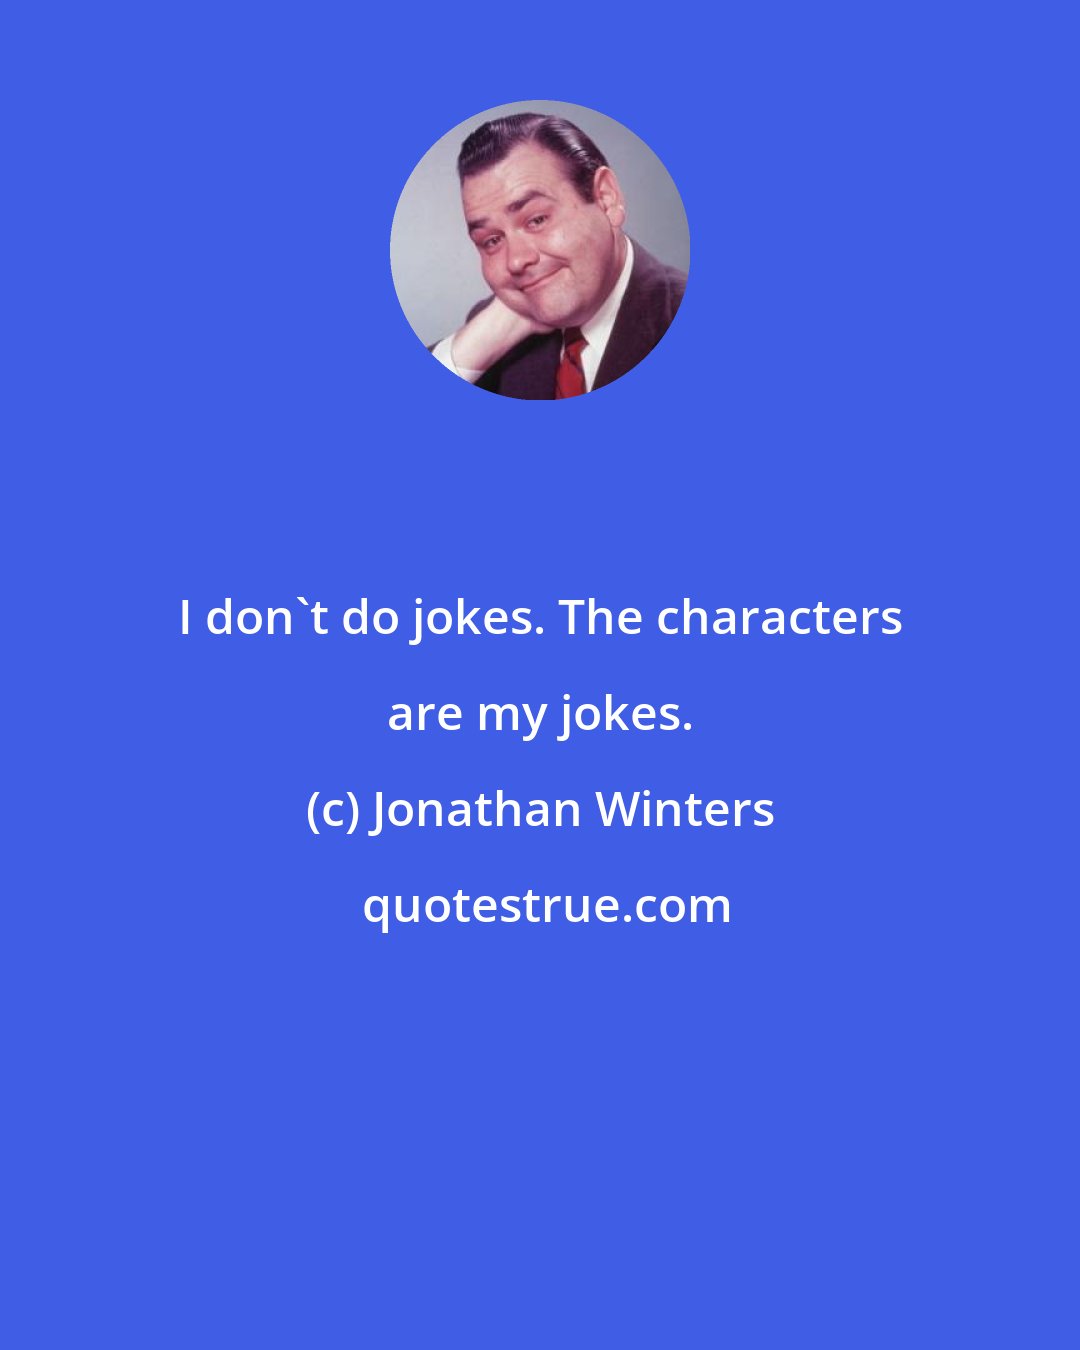 Jonathan Winters: I don't do jokes. The characters are my jokes.